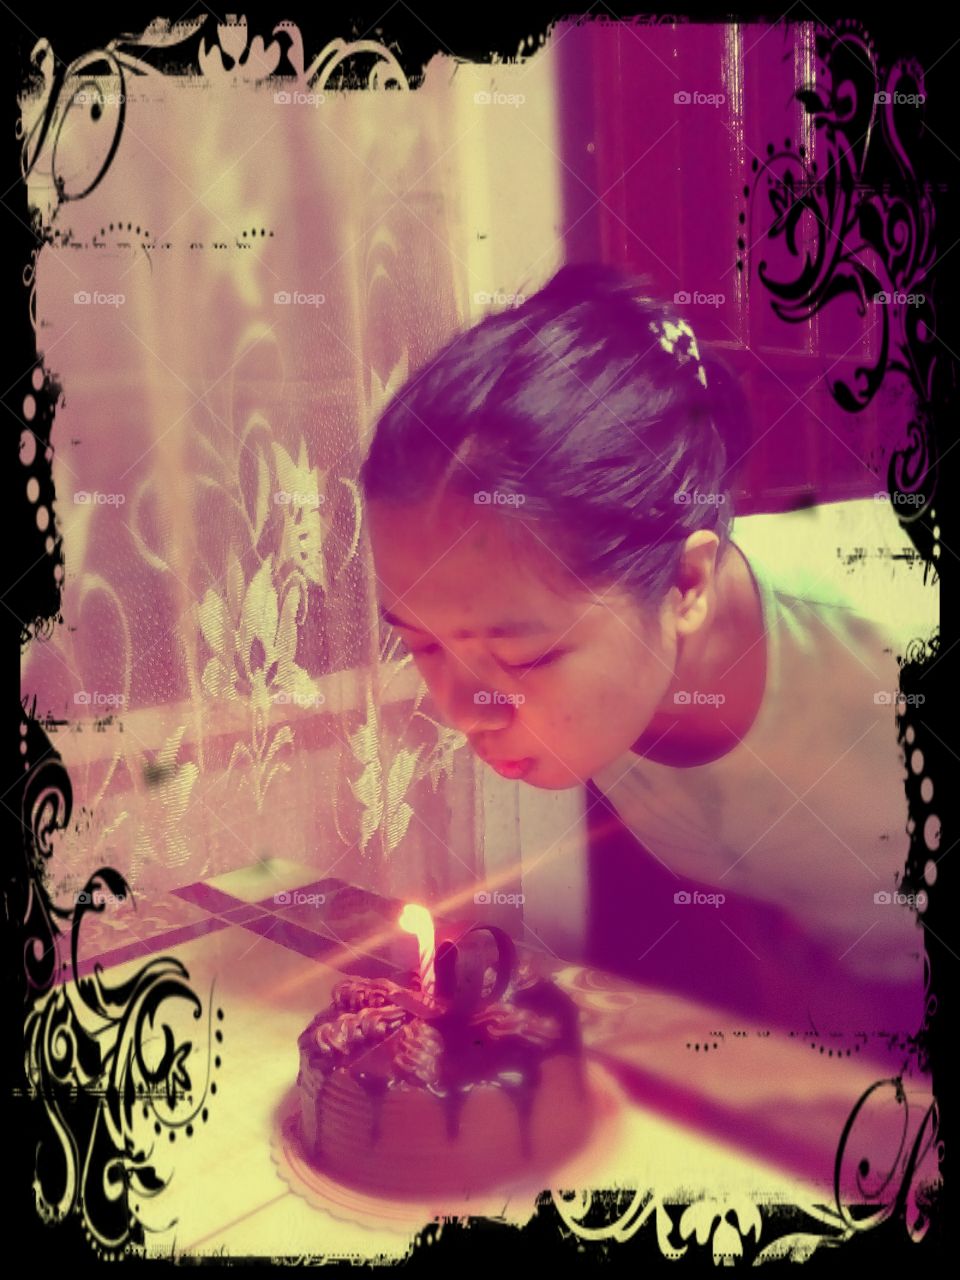 On my birthday :-)